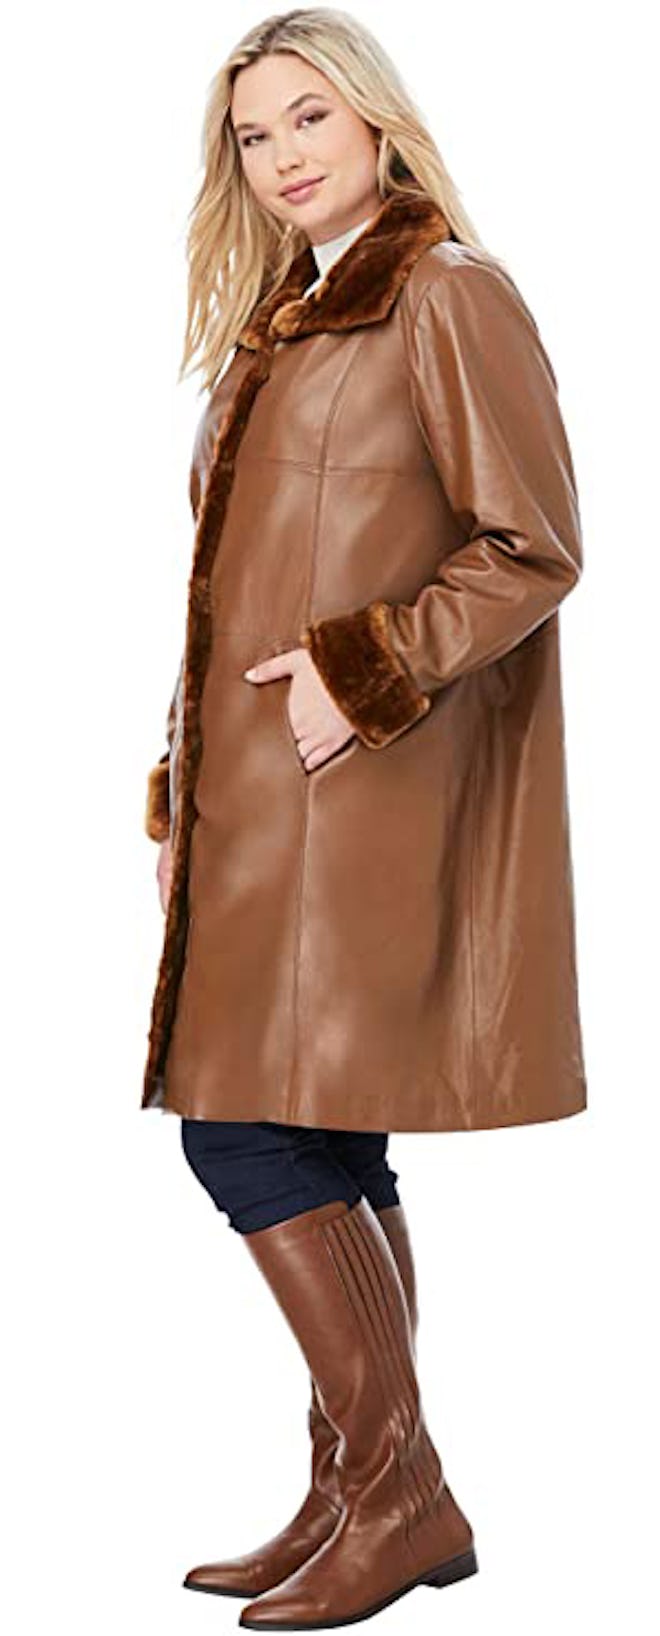 Jessica London Women's Plus Size Fur-Trimmed Leather Swing Coat